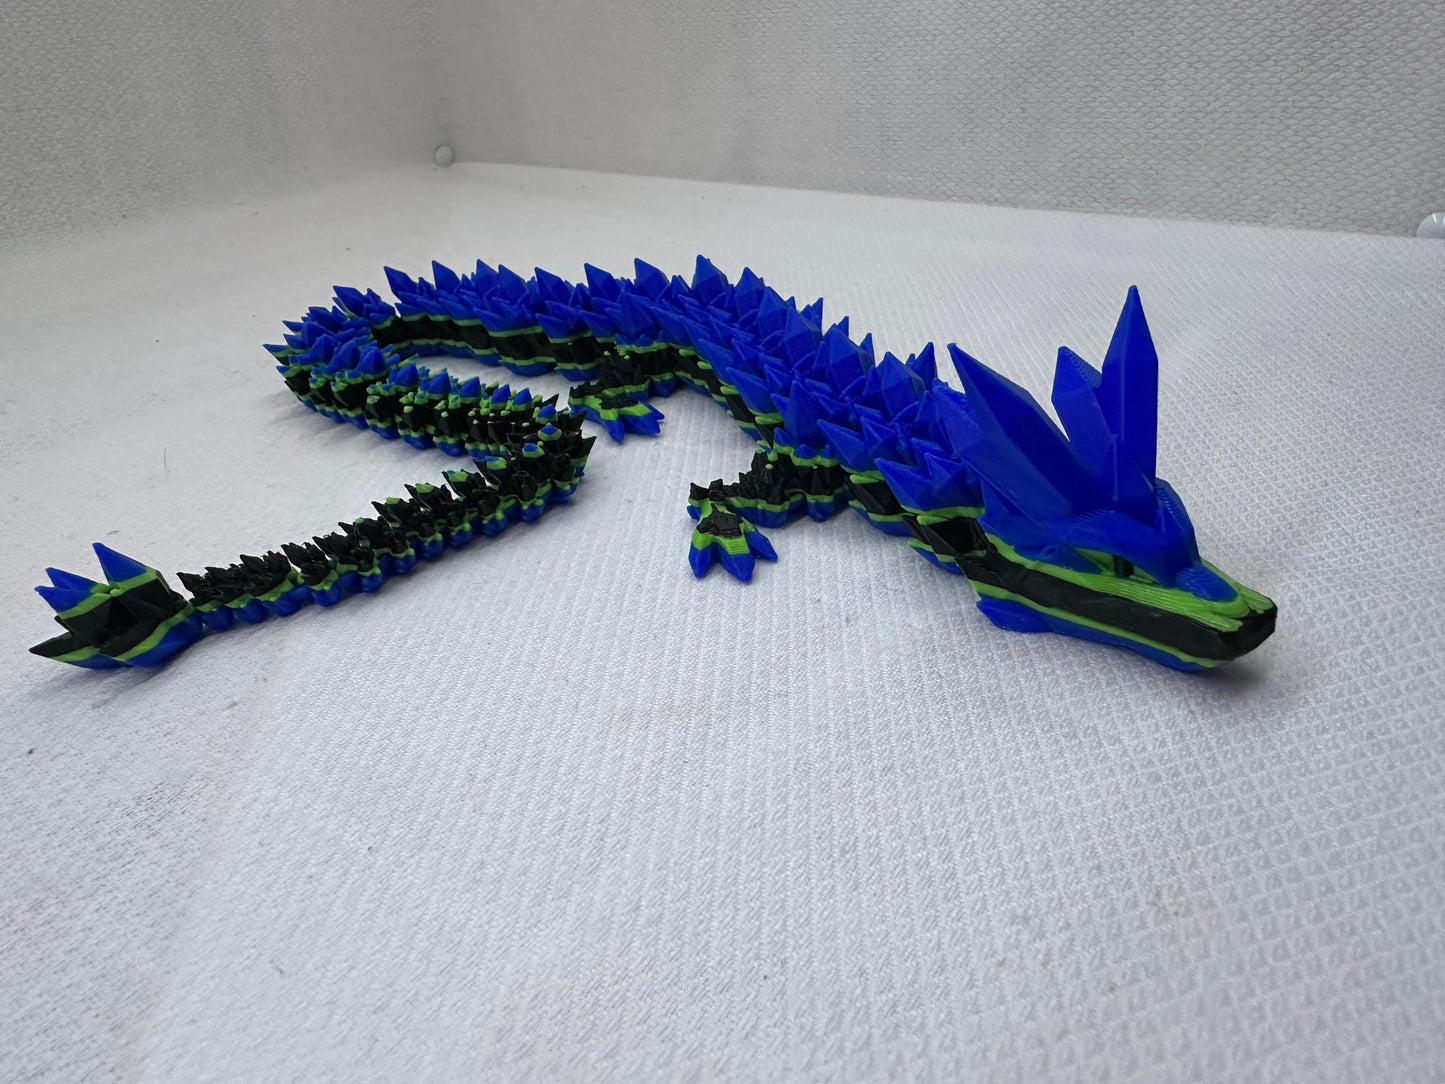 3D Printed Articulating Crystal Dragons Fidget